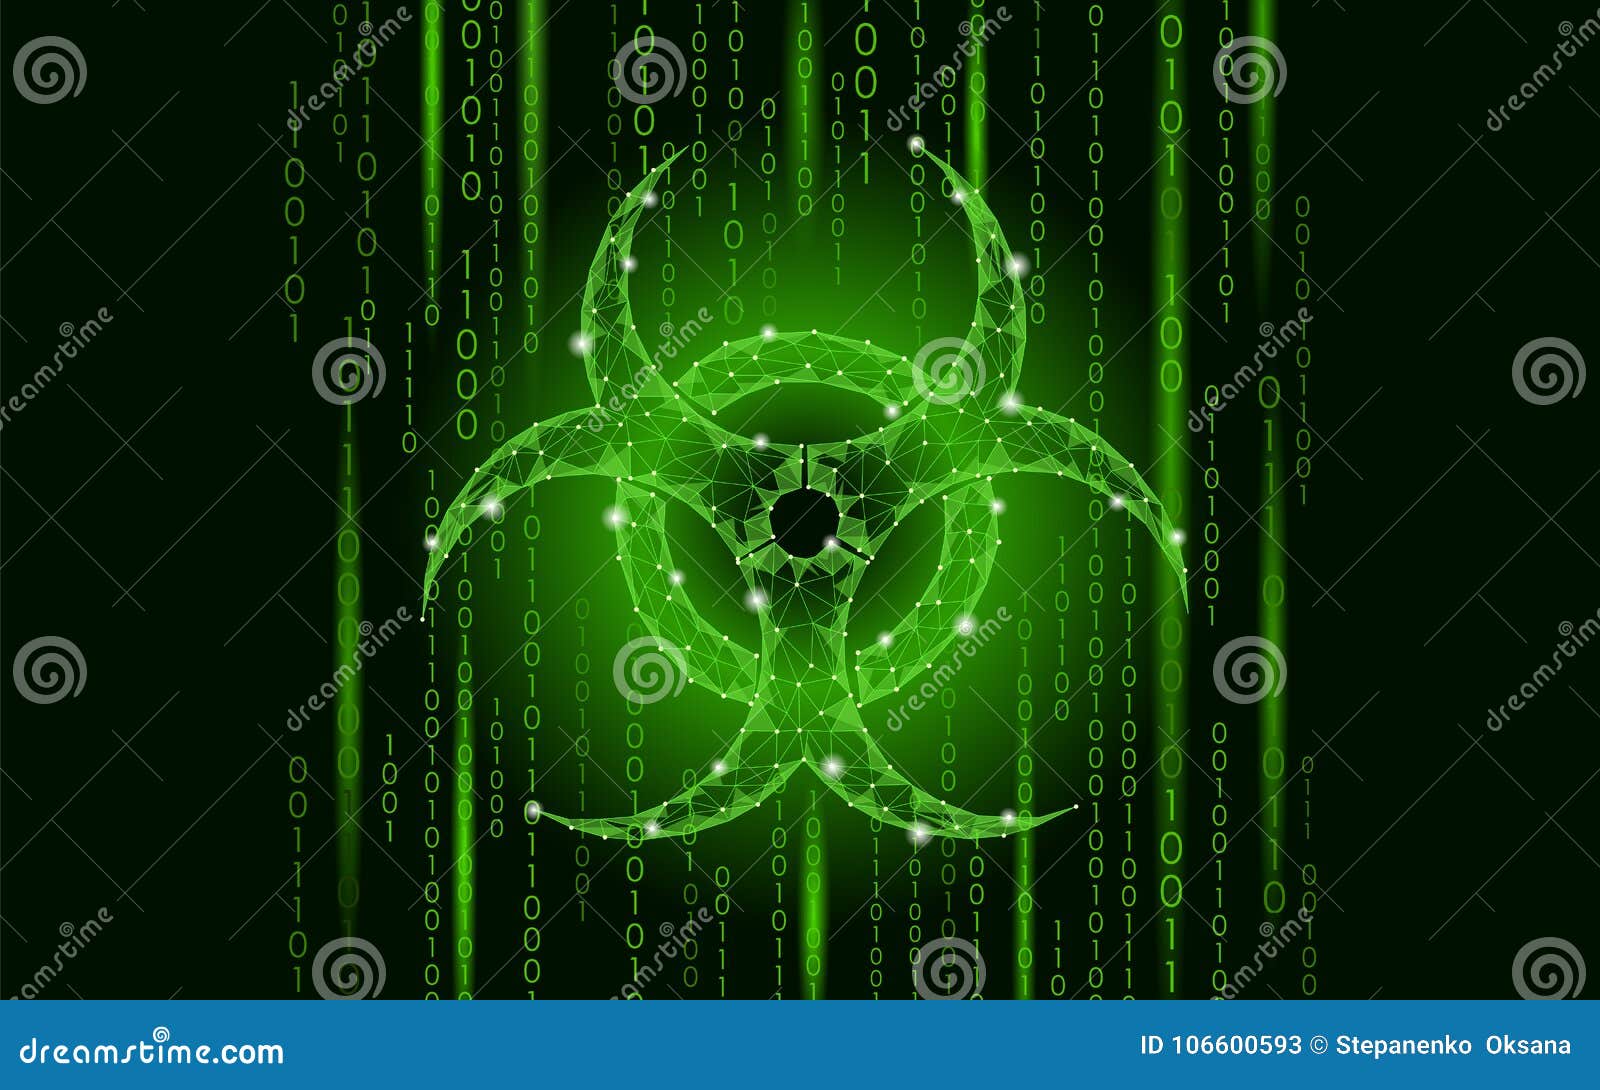 computer web virus attack danger. biohazard sign epidemia alert data information safety secure warning. hacker